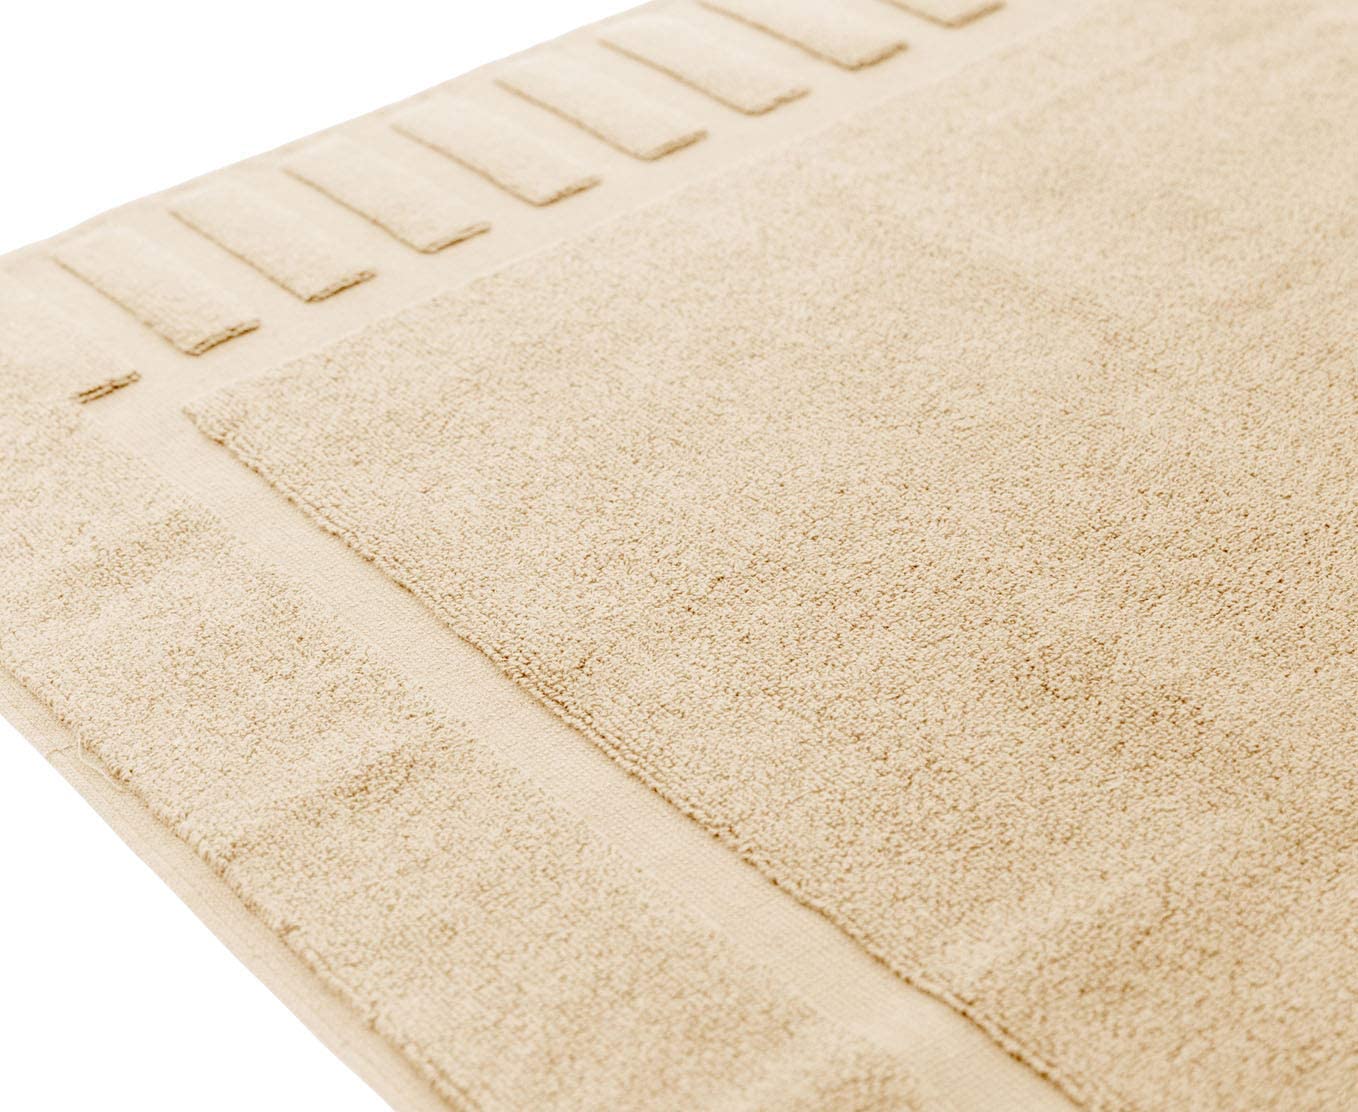 White Classic Luxury Bath Mat Floor Towel Set Absorbent Cotton Hotel Spa Showe eBay